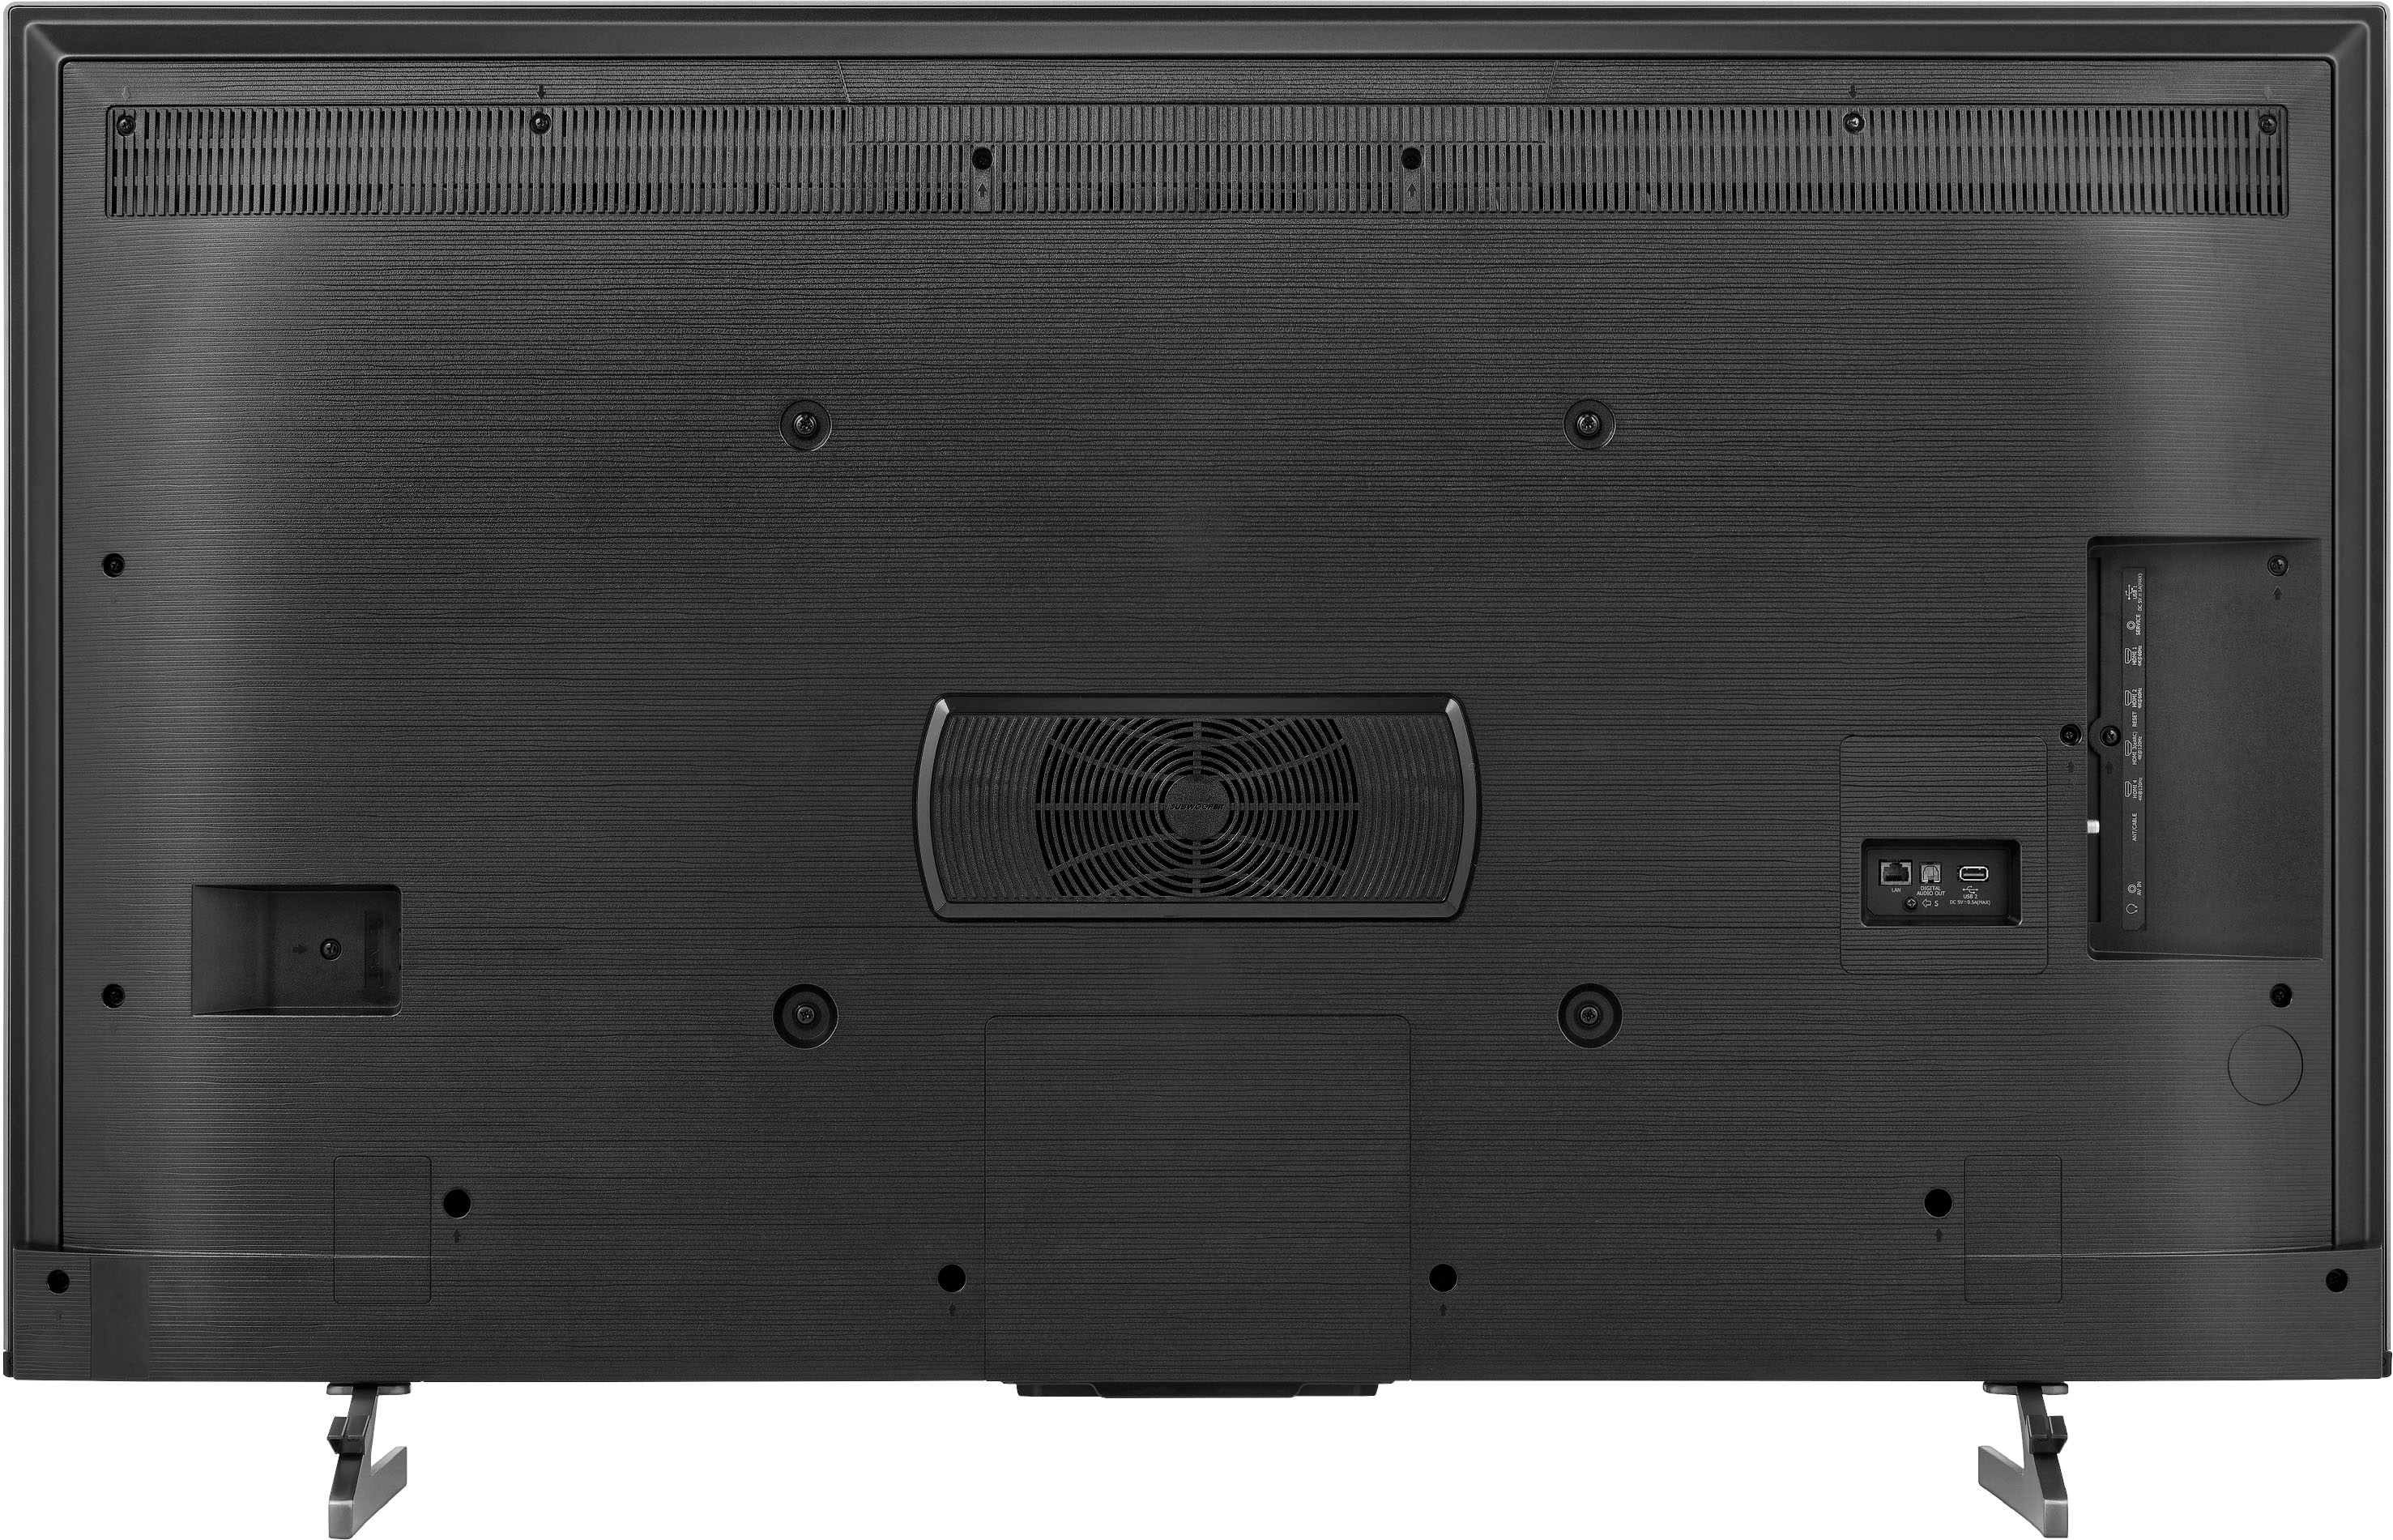 Hisense 55 4K Quantum Dot QLED Smart Google TV (55U8H) - Hisense USA